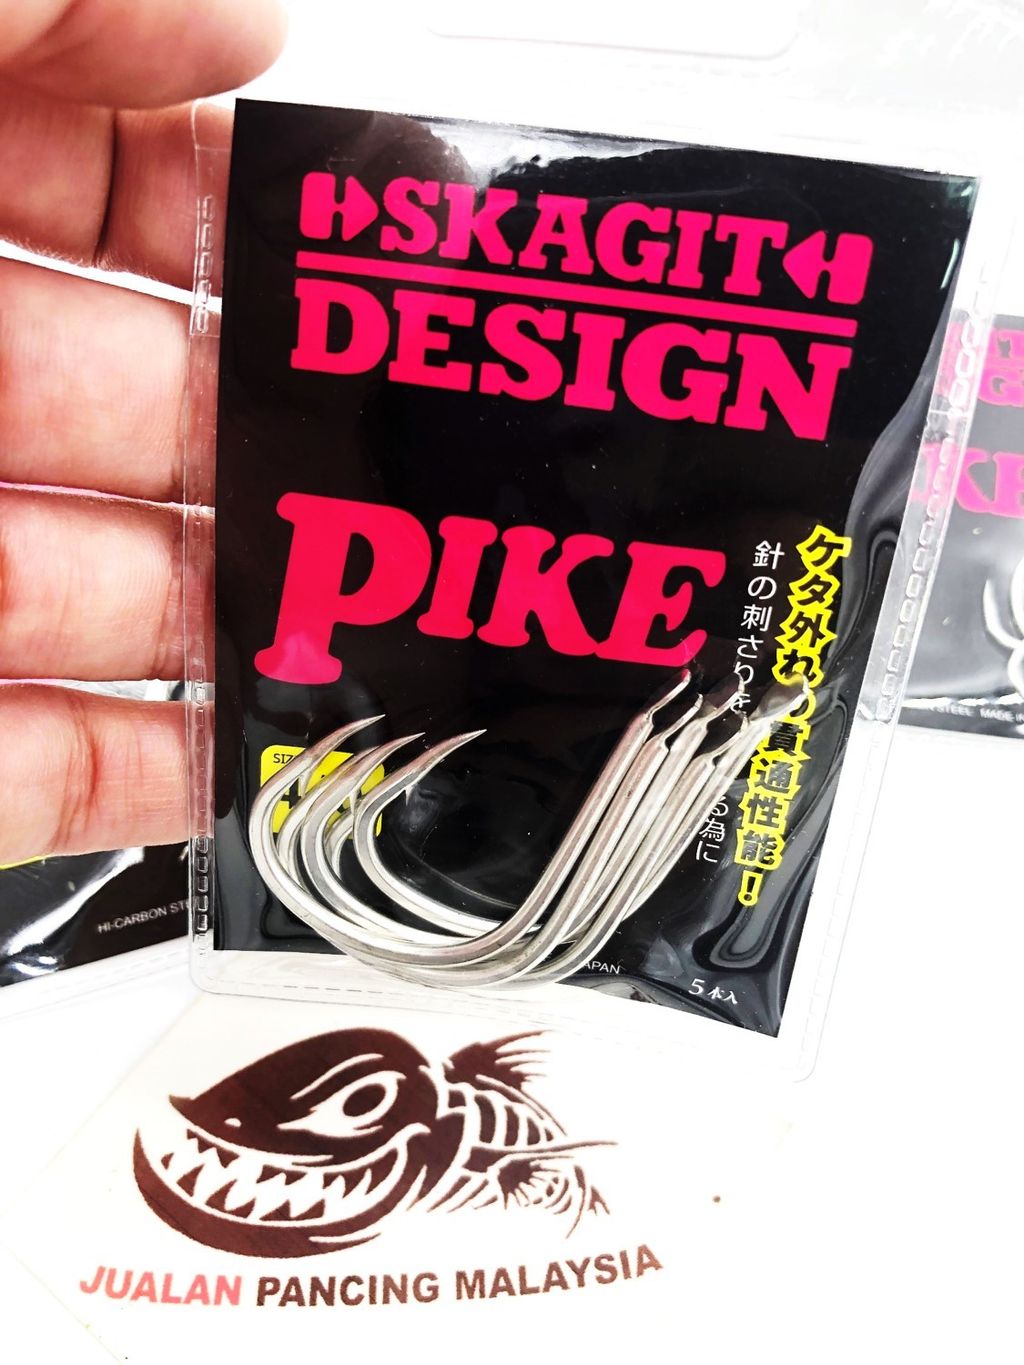 Skagit Design Jigging 1PCK 5PCS KILLER PIKE Assist Hook ZXCC.jpg